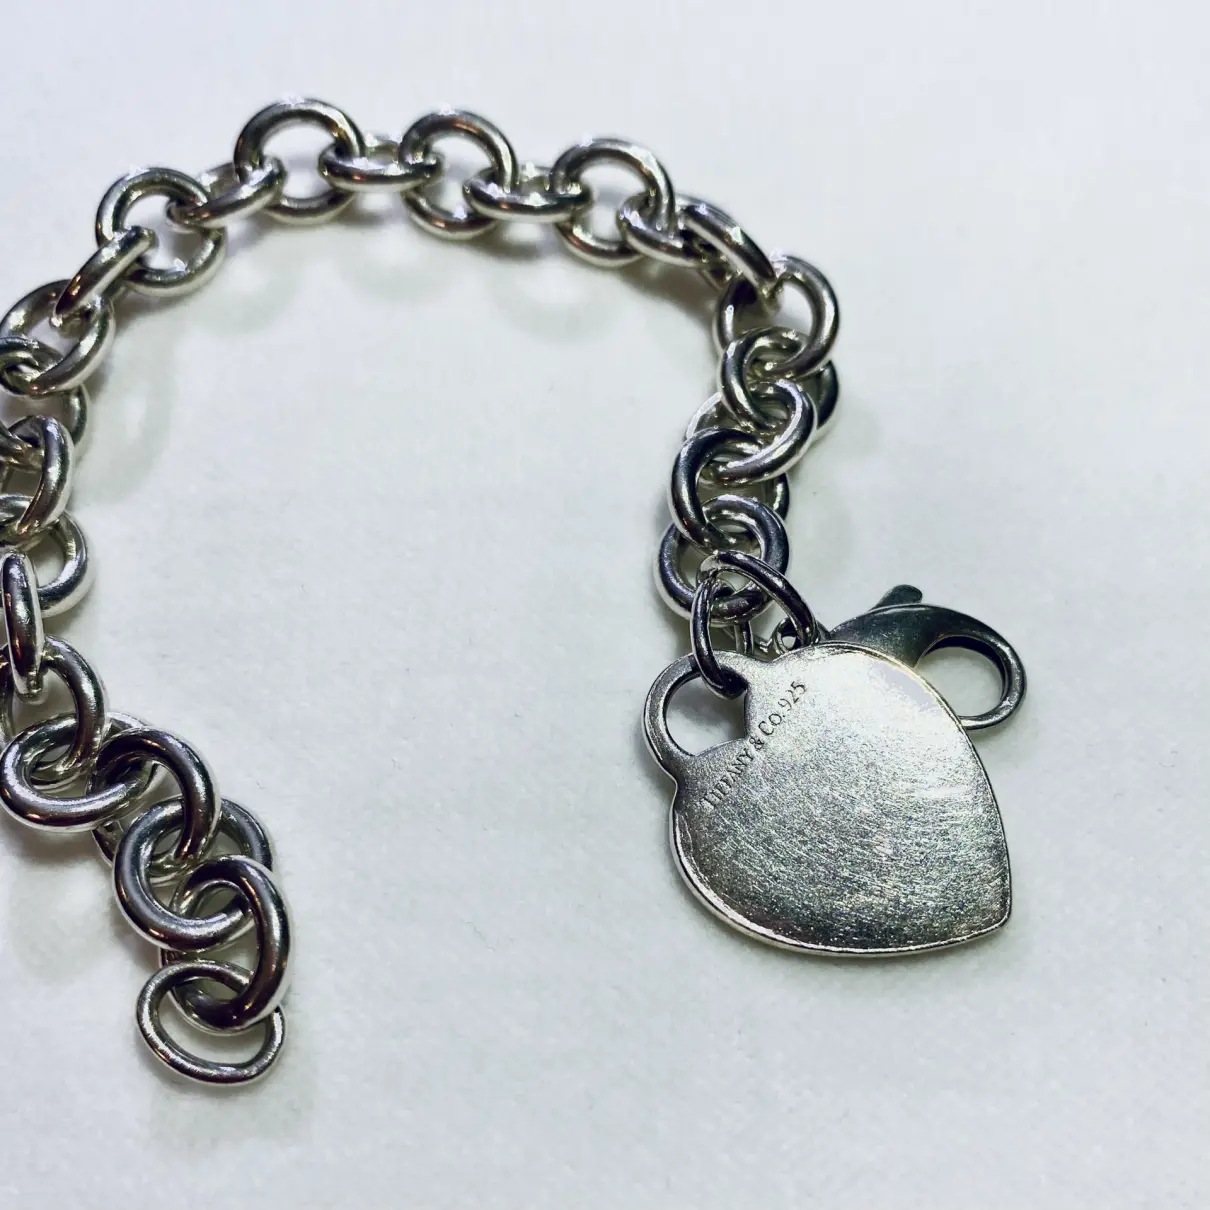 Buy Tiffany & Co Return to Tiffany silver bracelet online - Vintage